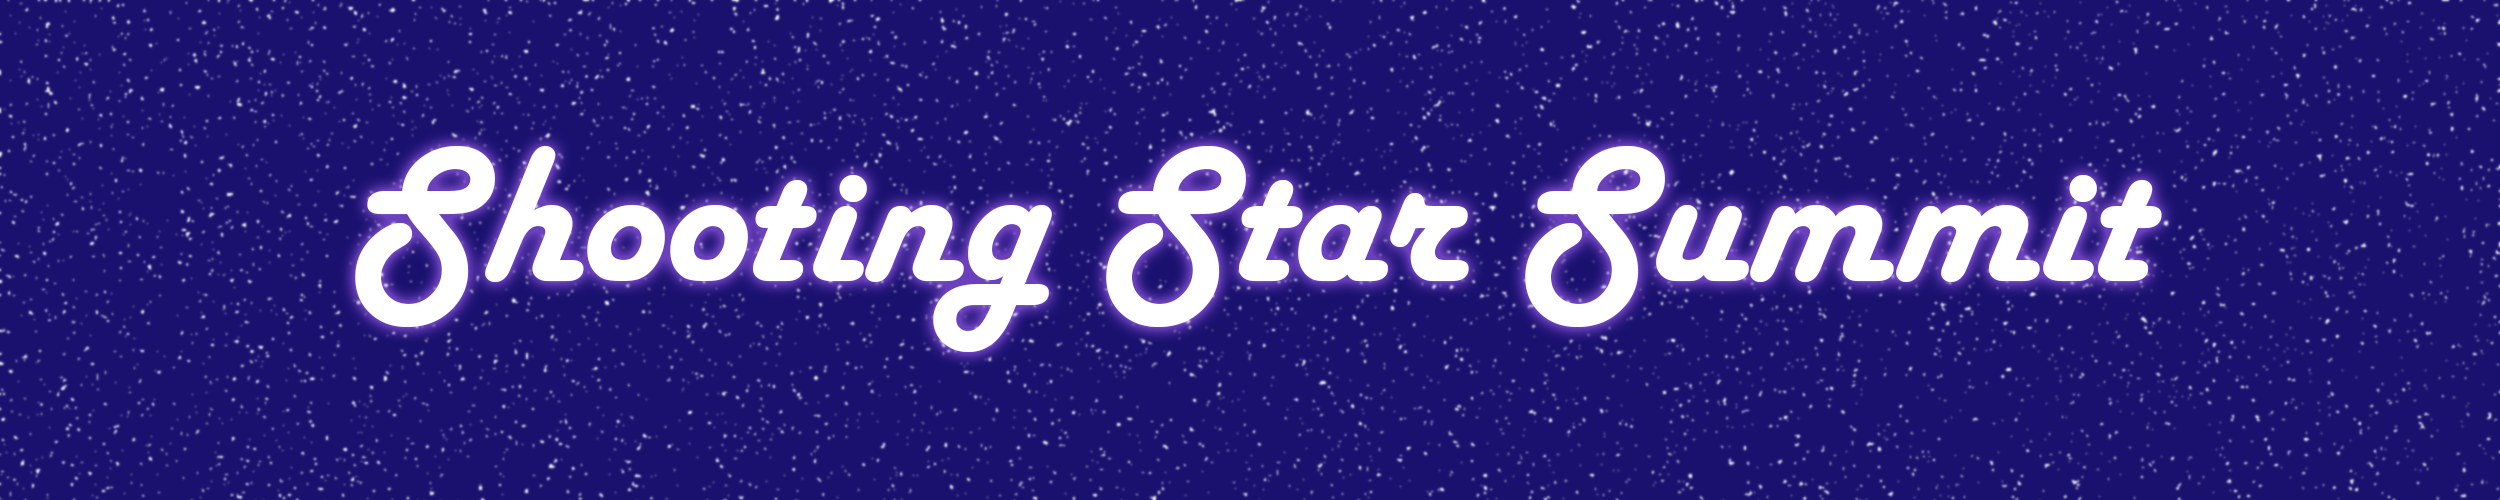 Shooting Star Summit Banner